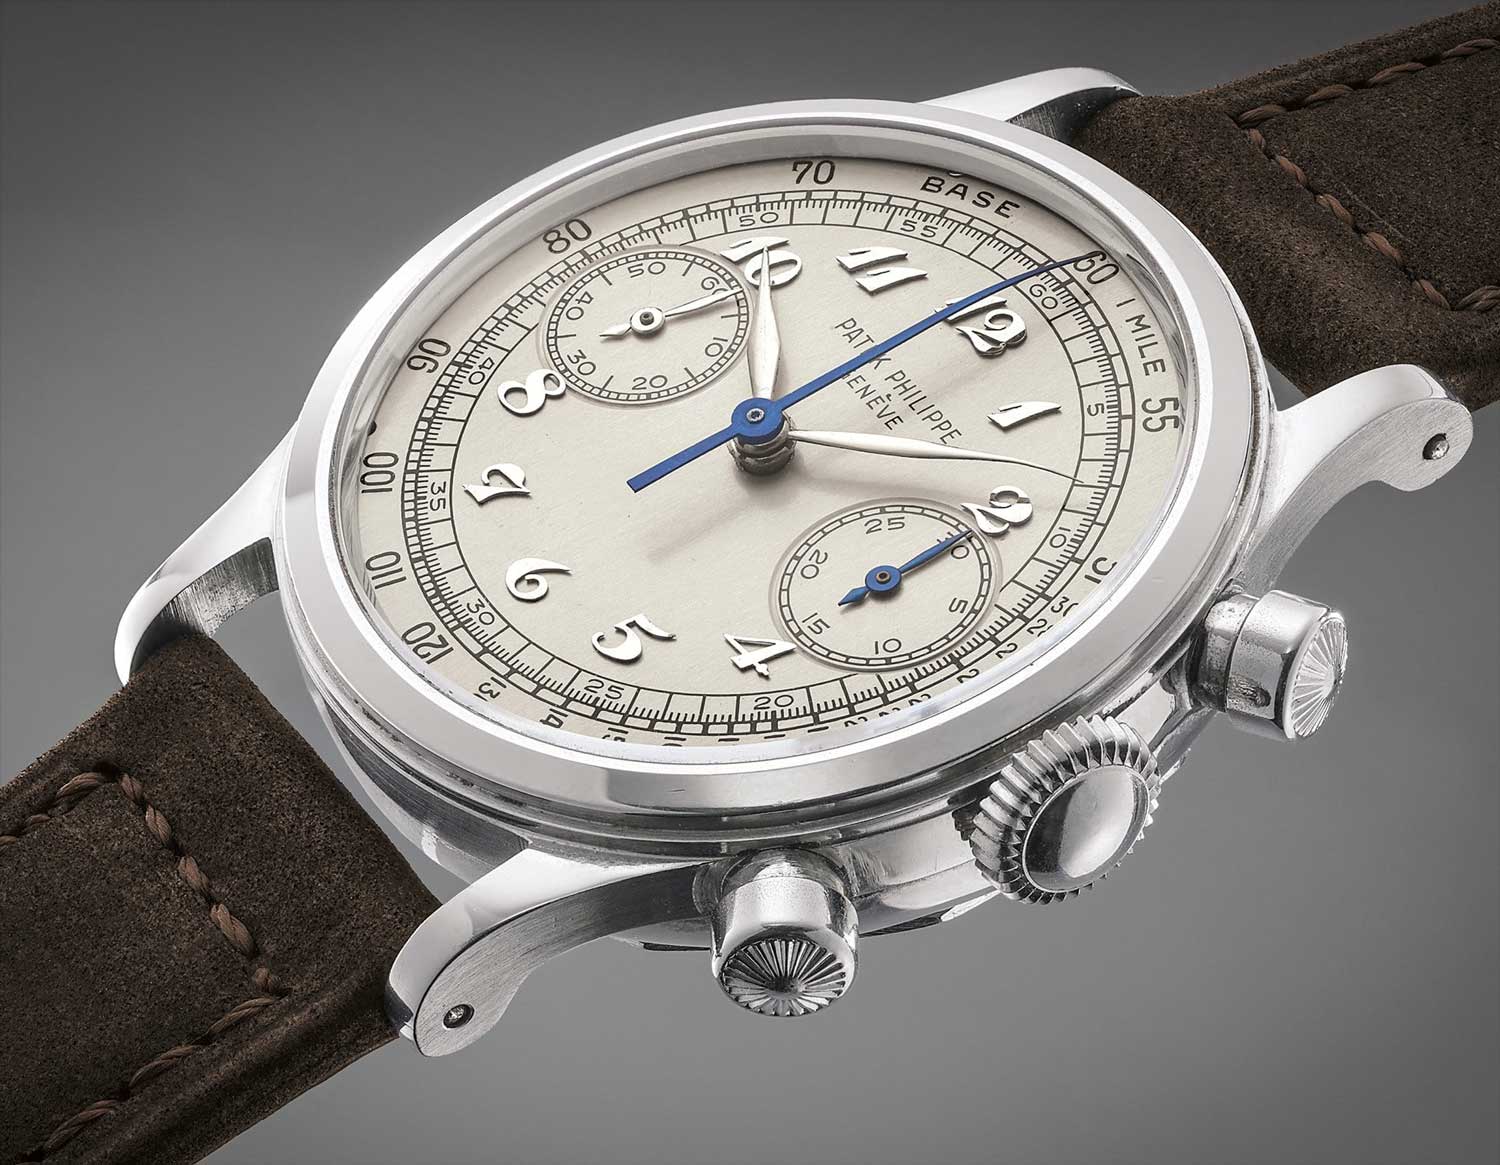 1950 Patek Philippe chronograph ref. 1463 in steel with Breguet numerals (Image: phillipswatches.com)